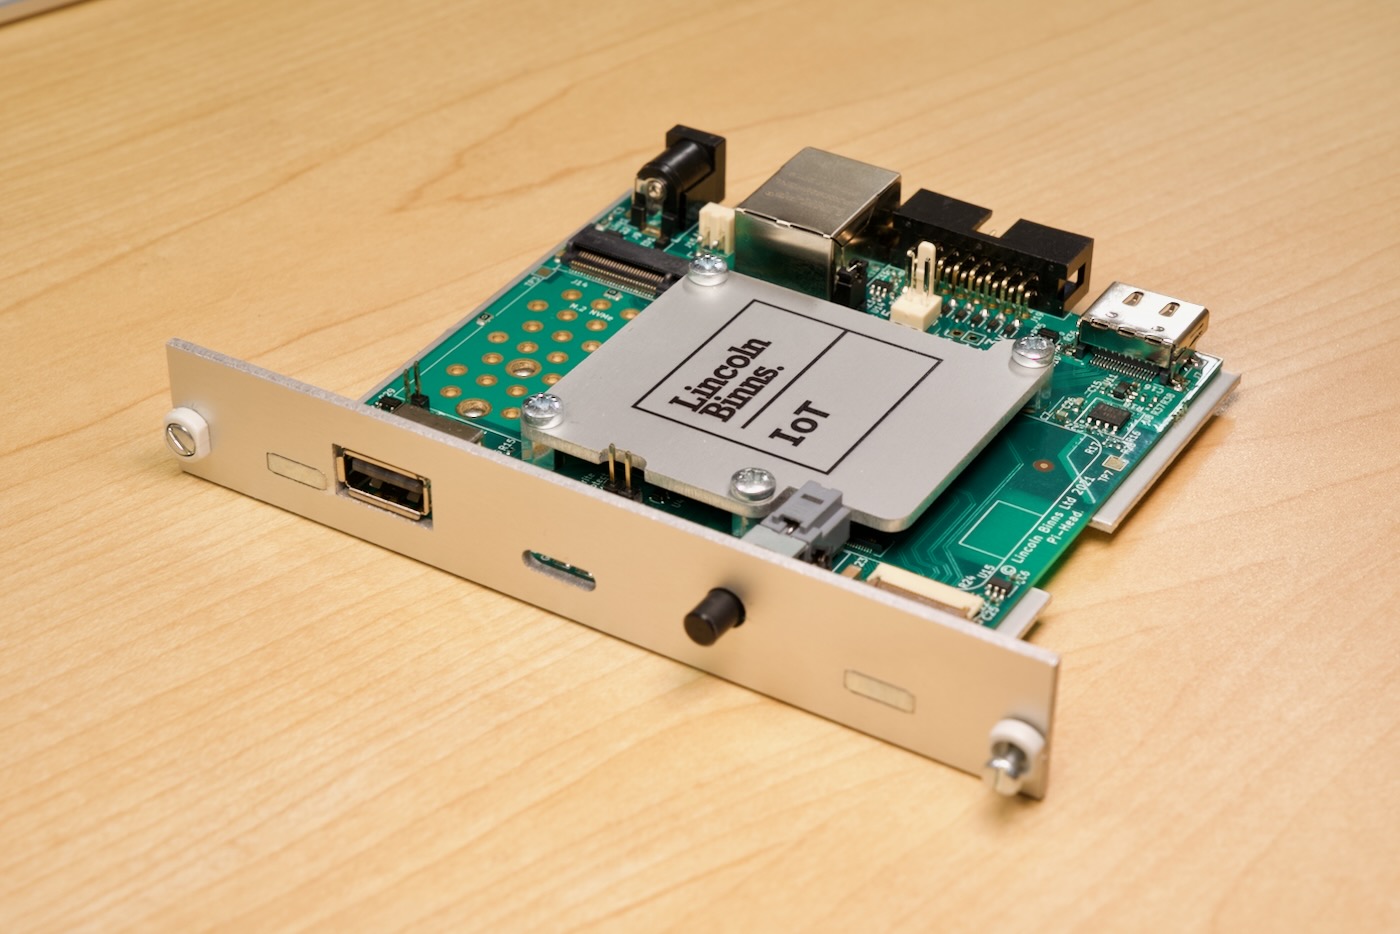 Lincoln-Binns Eurocard IoT Raspberry Pi computer board